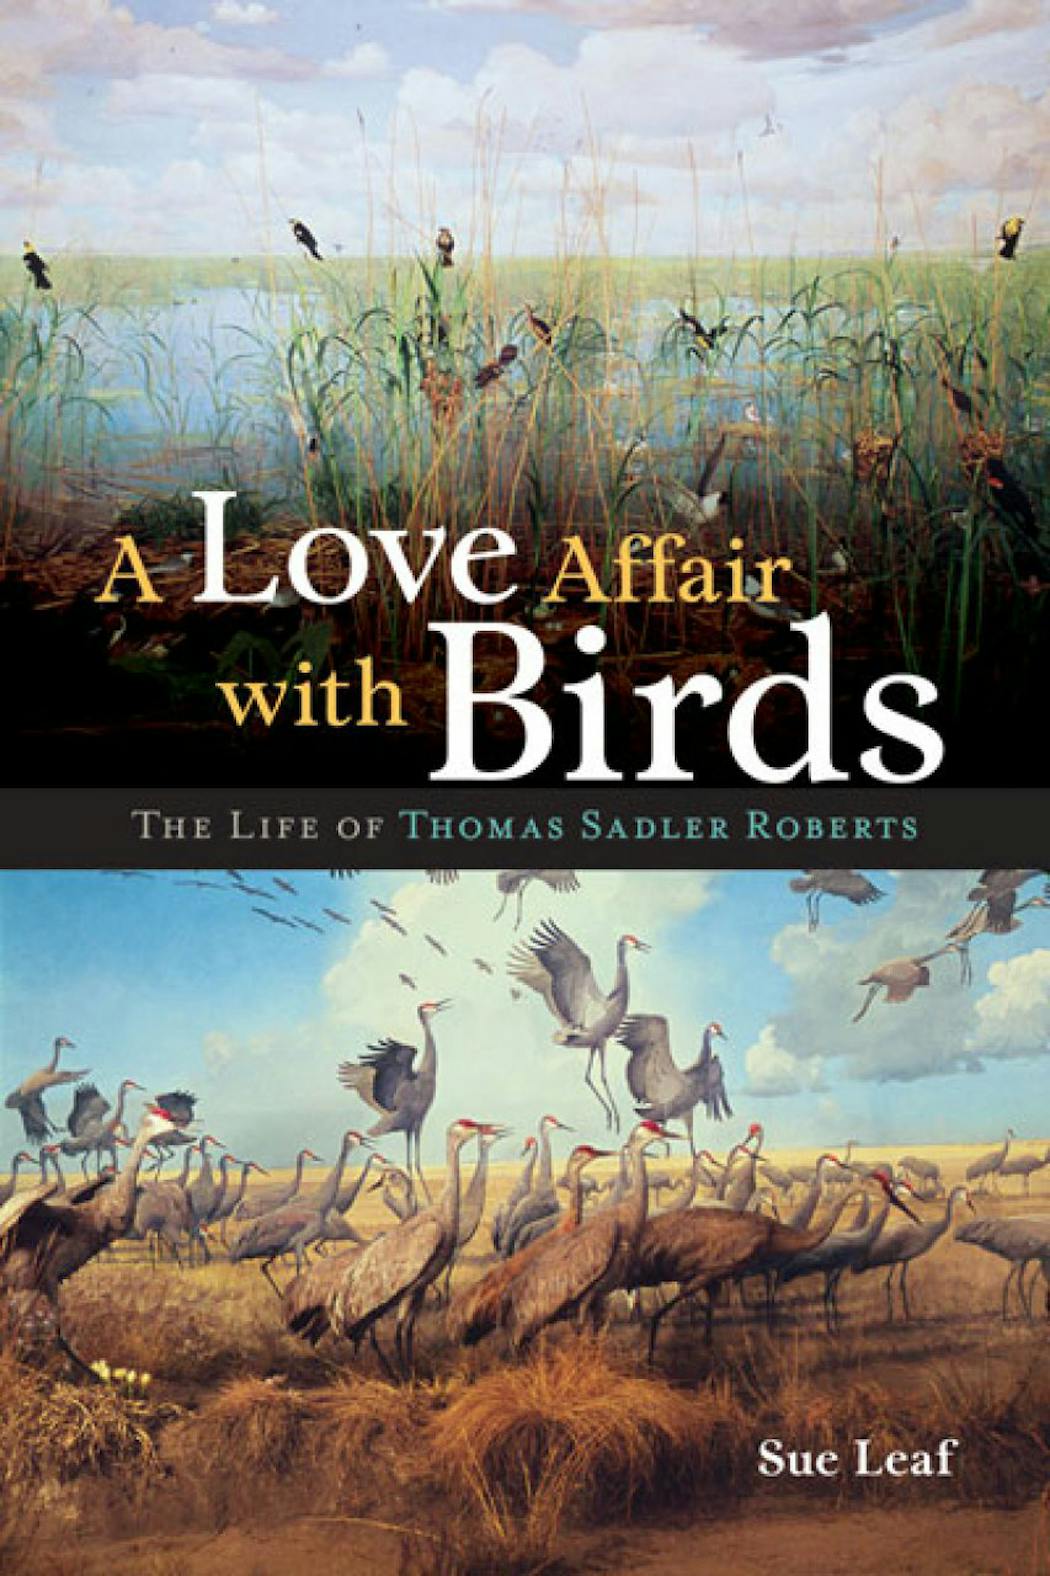 “A Love Affair With Birds” by Sue Leaf